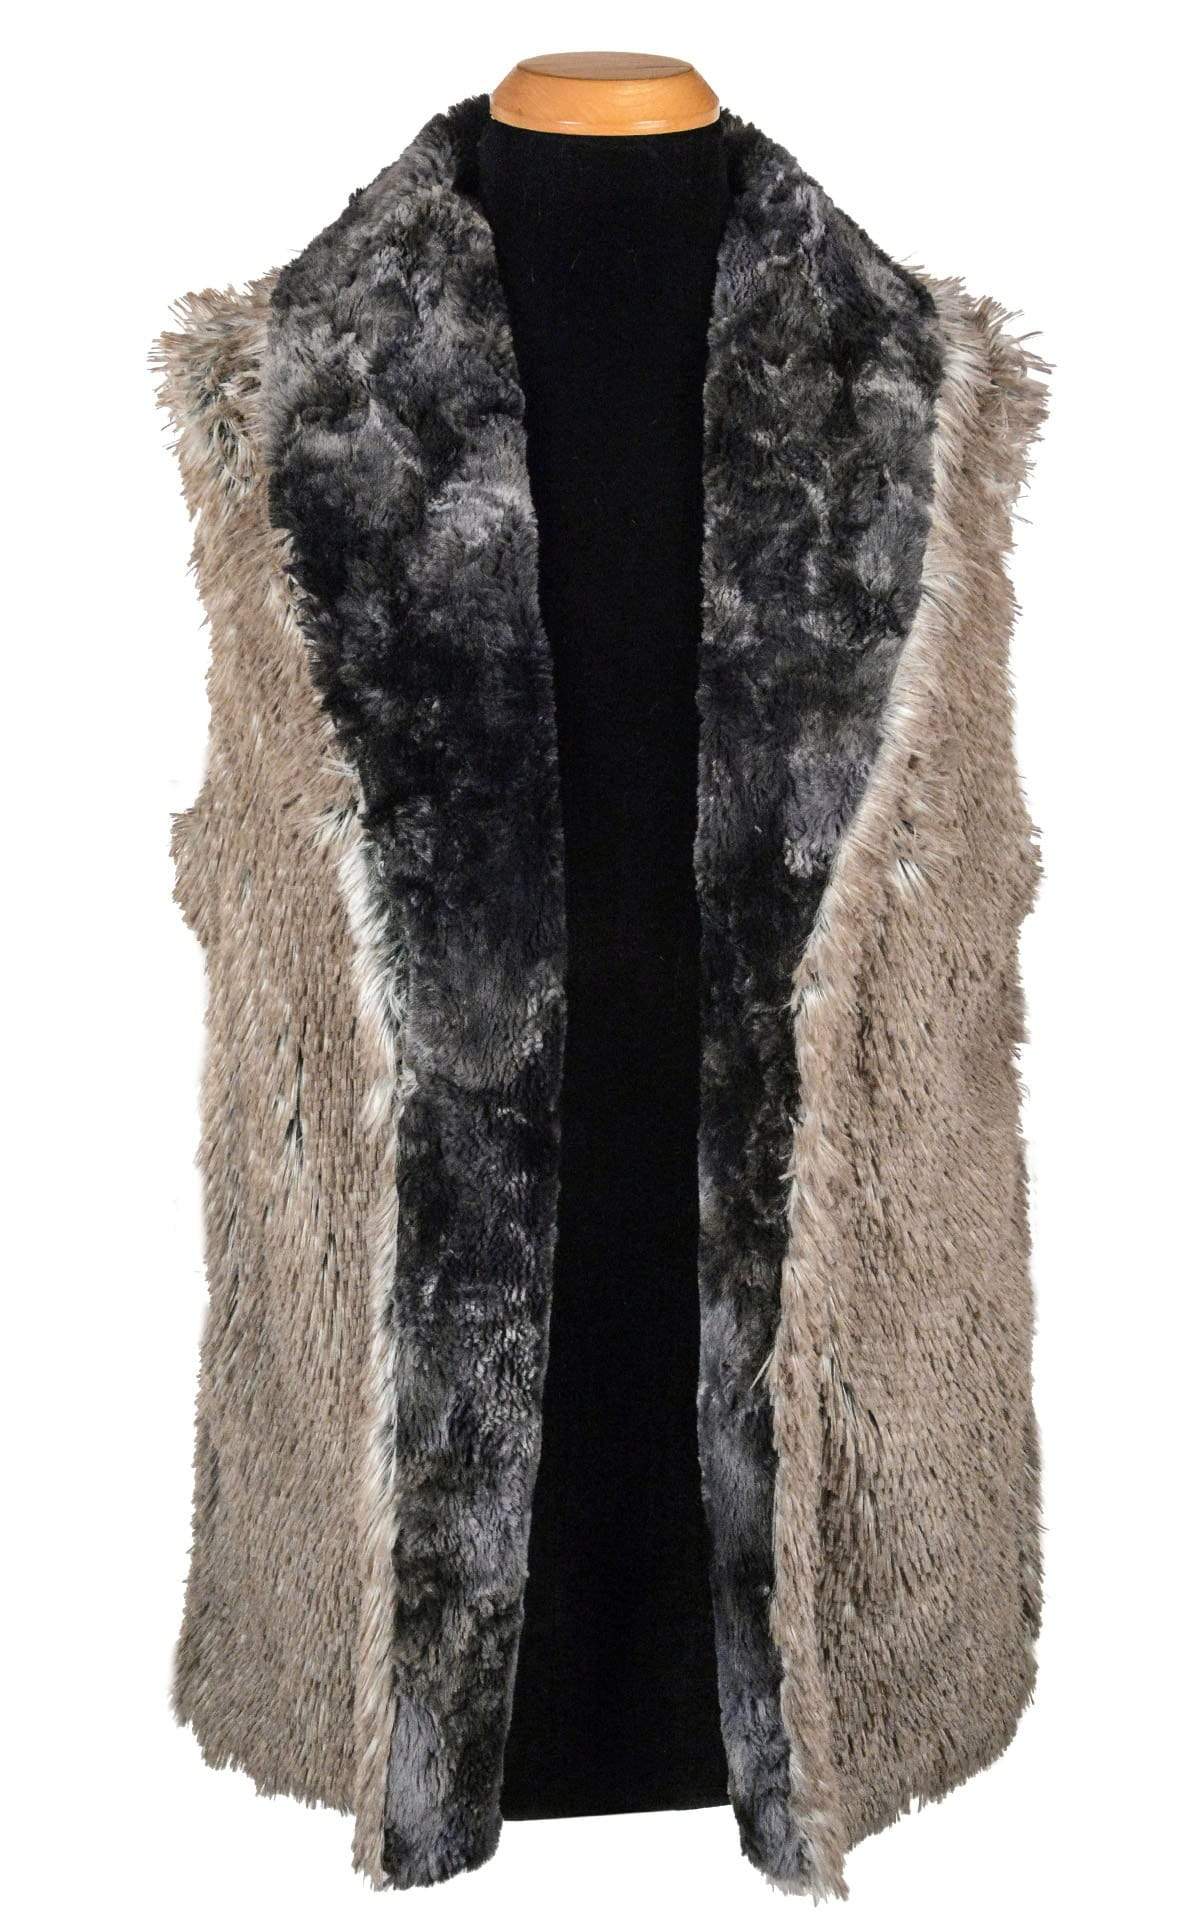 Reversed Shawl Collar Vest in Highland Skye Faux Fur lined Arctic Fox Handmade By Pandemonium Seattle USA